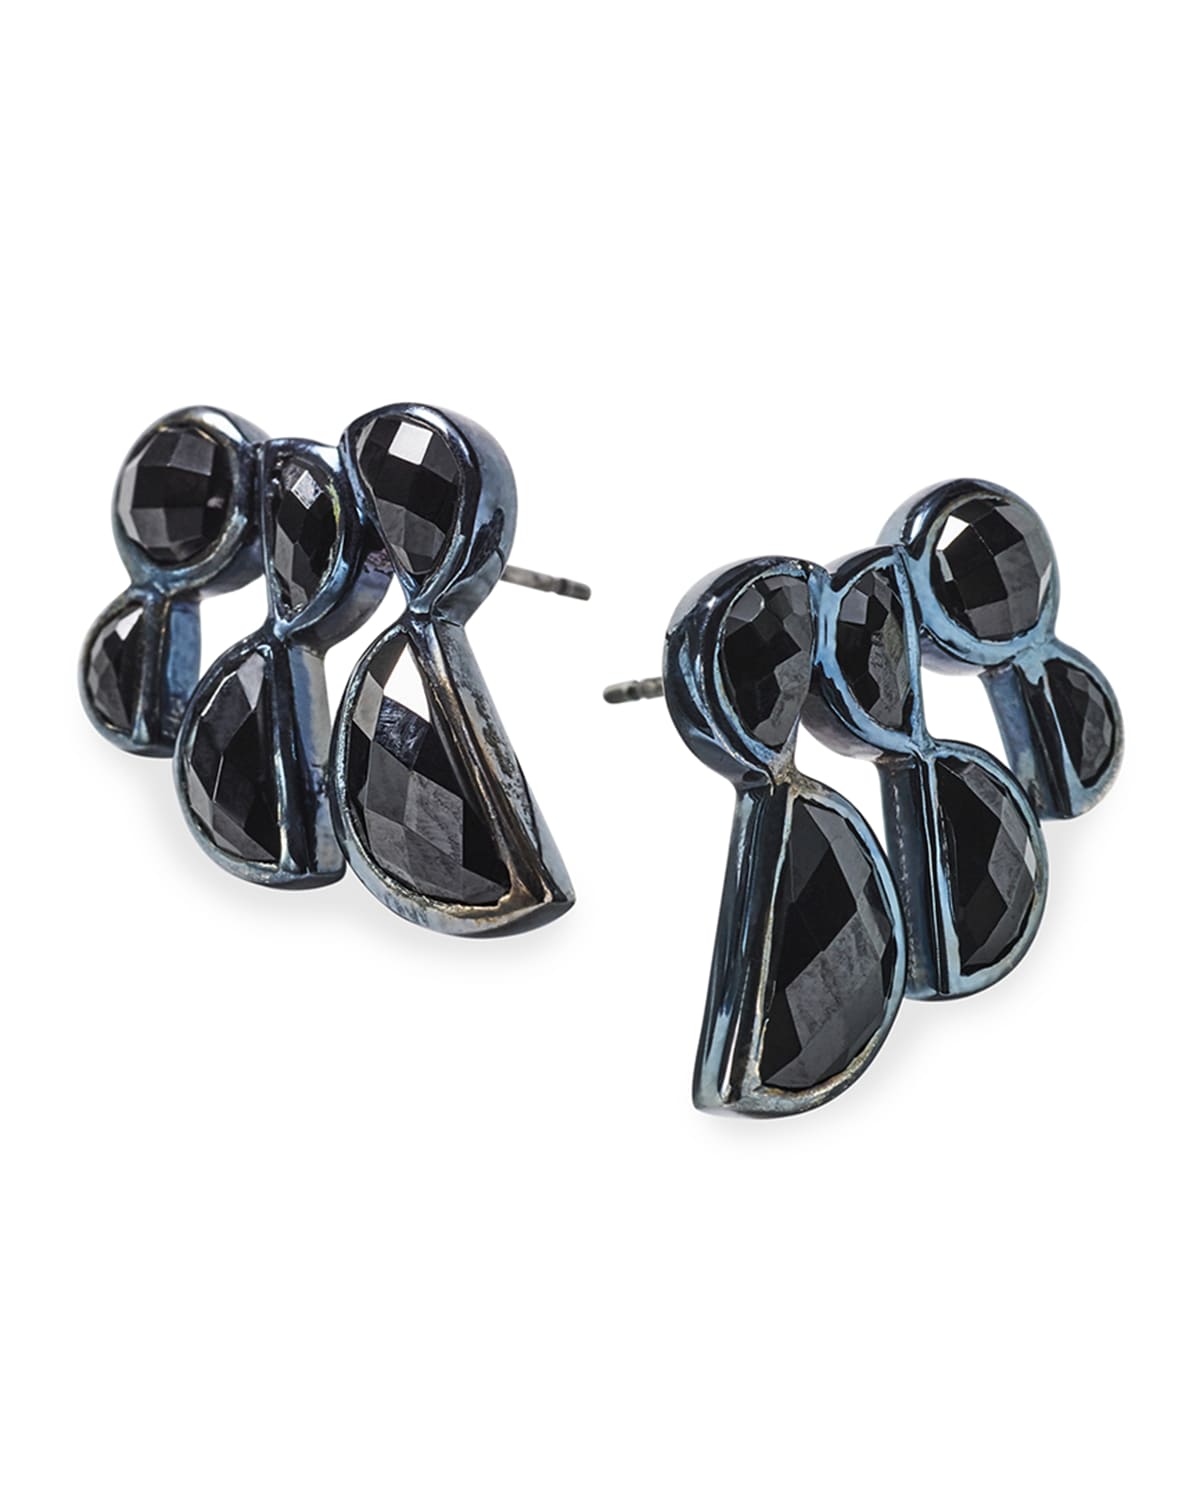 Prawn Earrings in Black Spinel